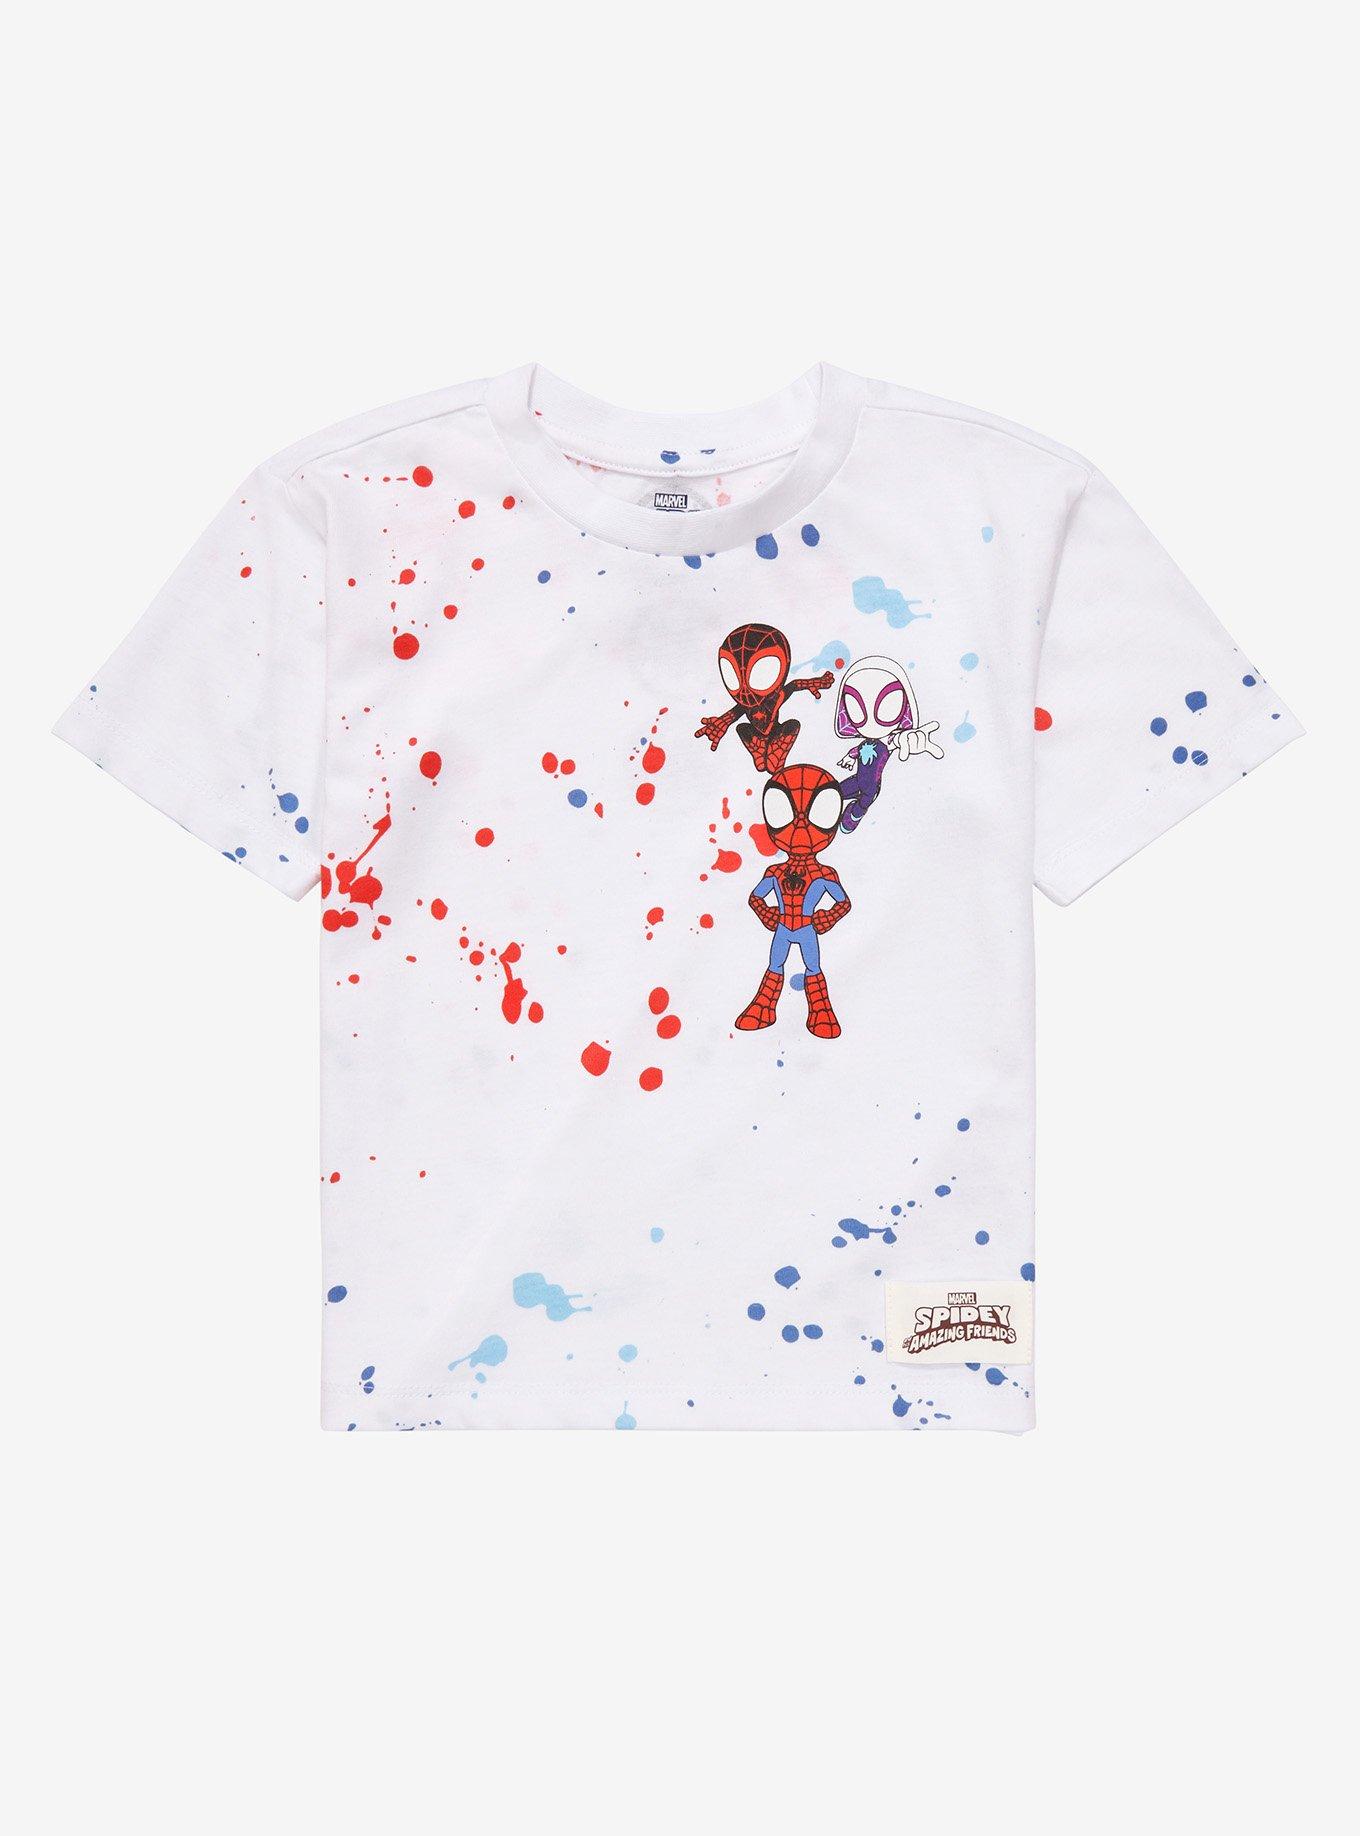 Deadpool Chibi Darts - Marvel Official T-Shirt.